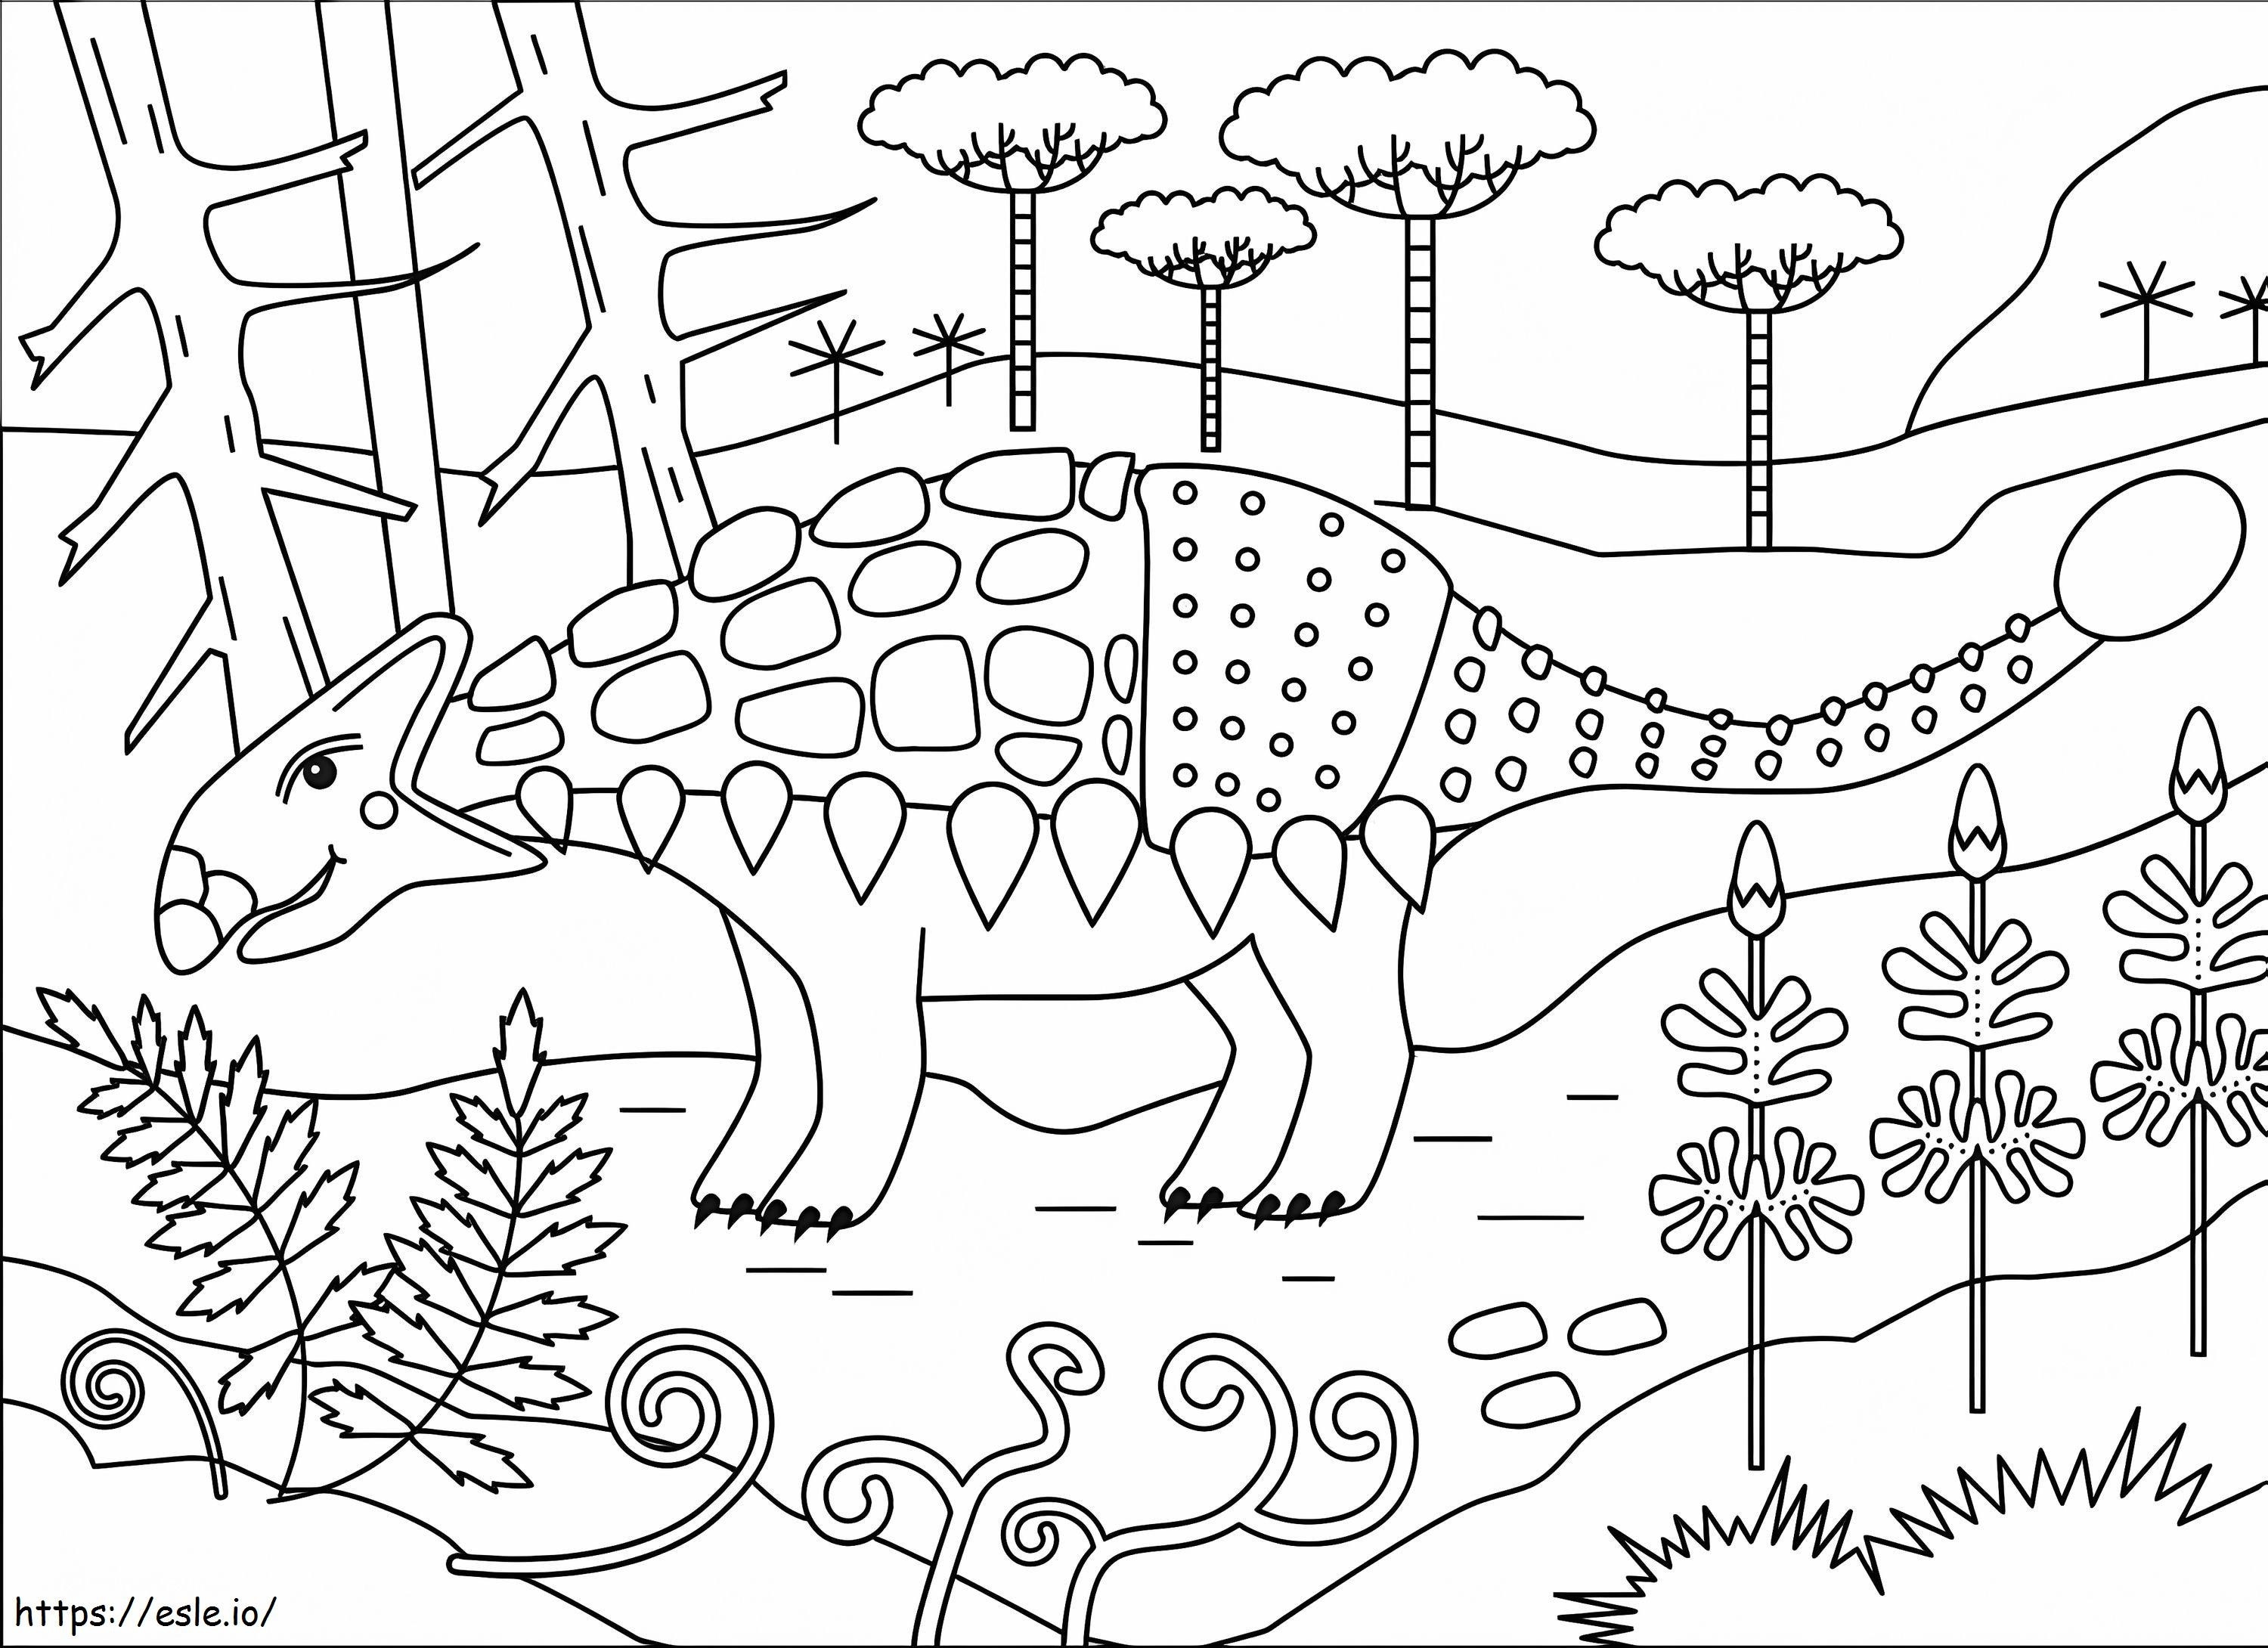 Coloriage Ankylosaure facile à imprimer dessin